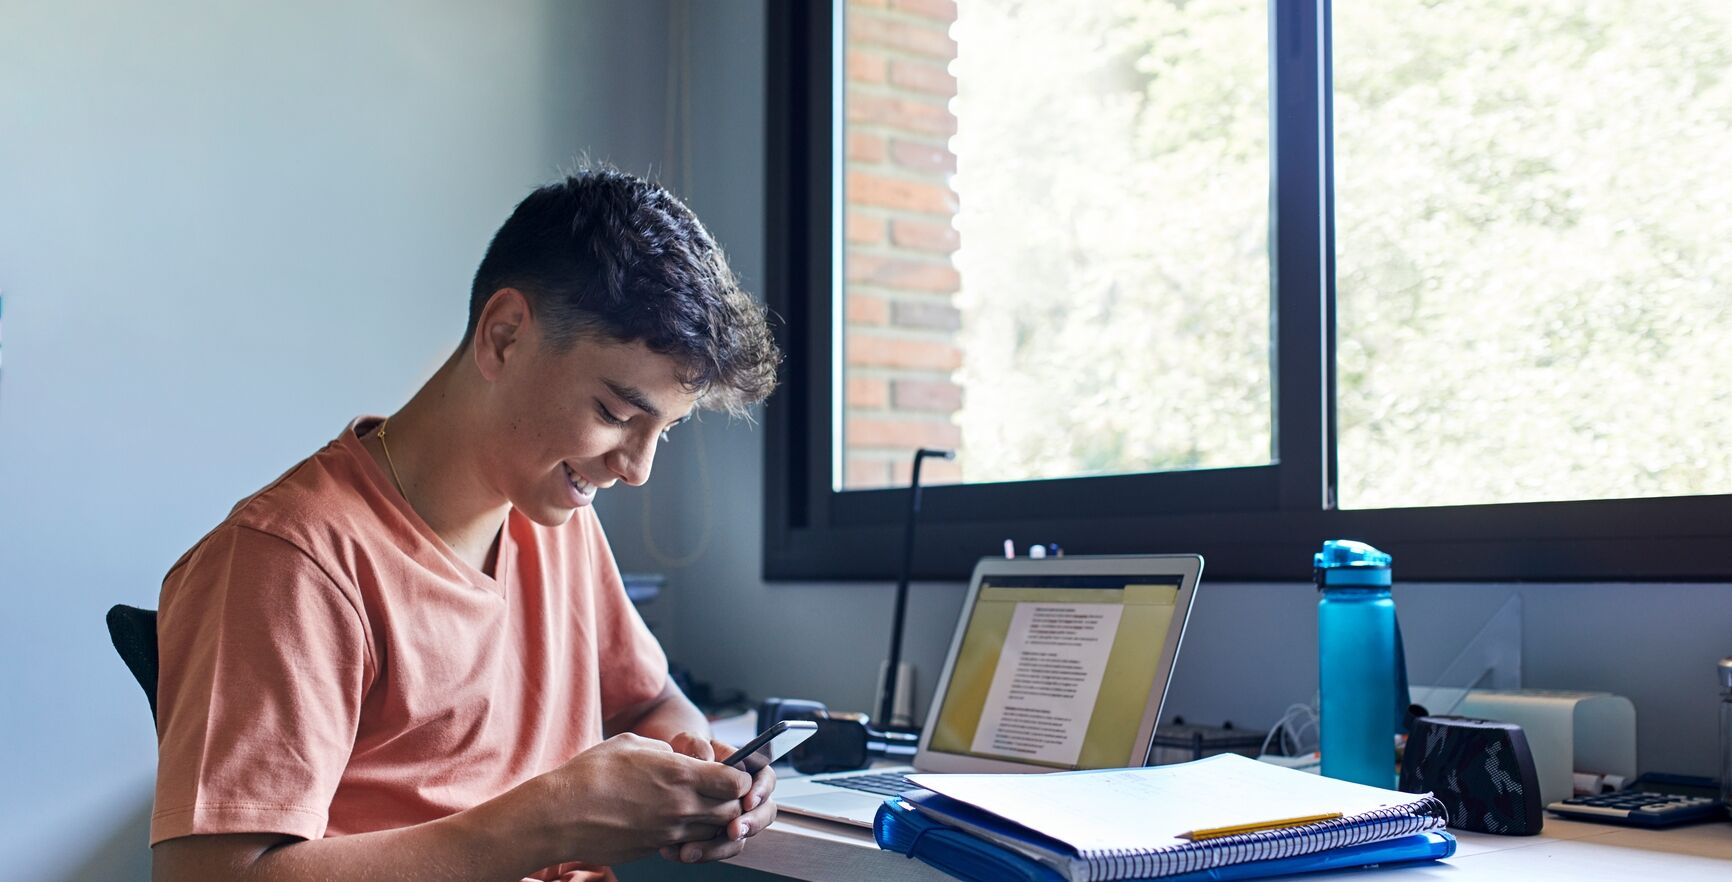 Teenage boy sitting at desk on phone